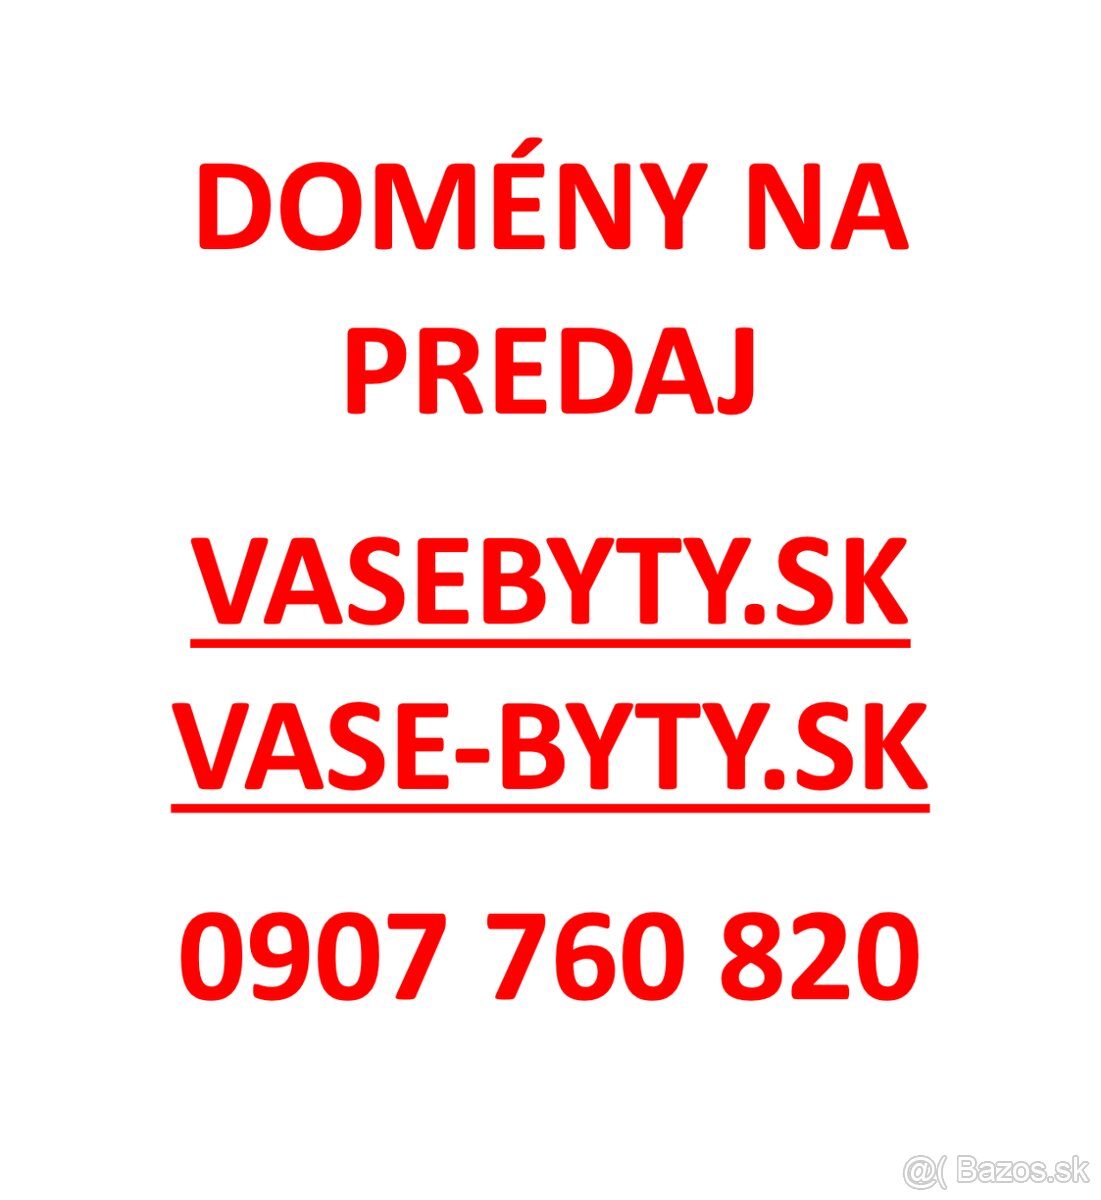 Predám domény: vasebyty.sk a vase-byty.sk